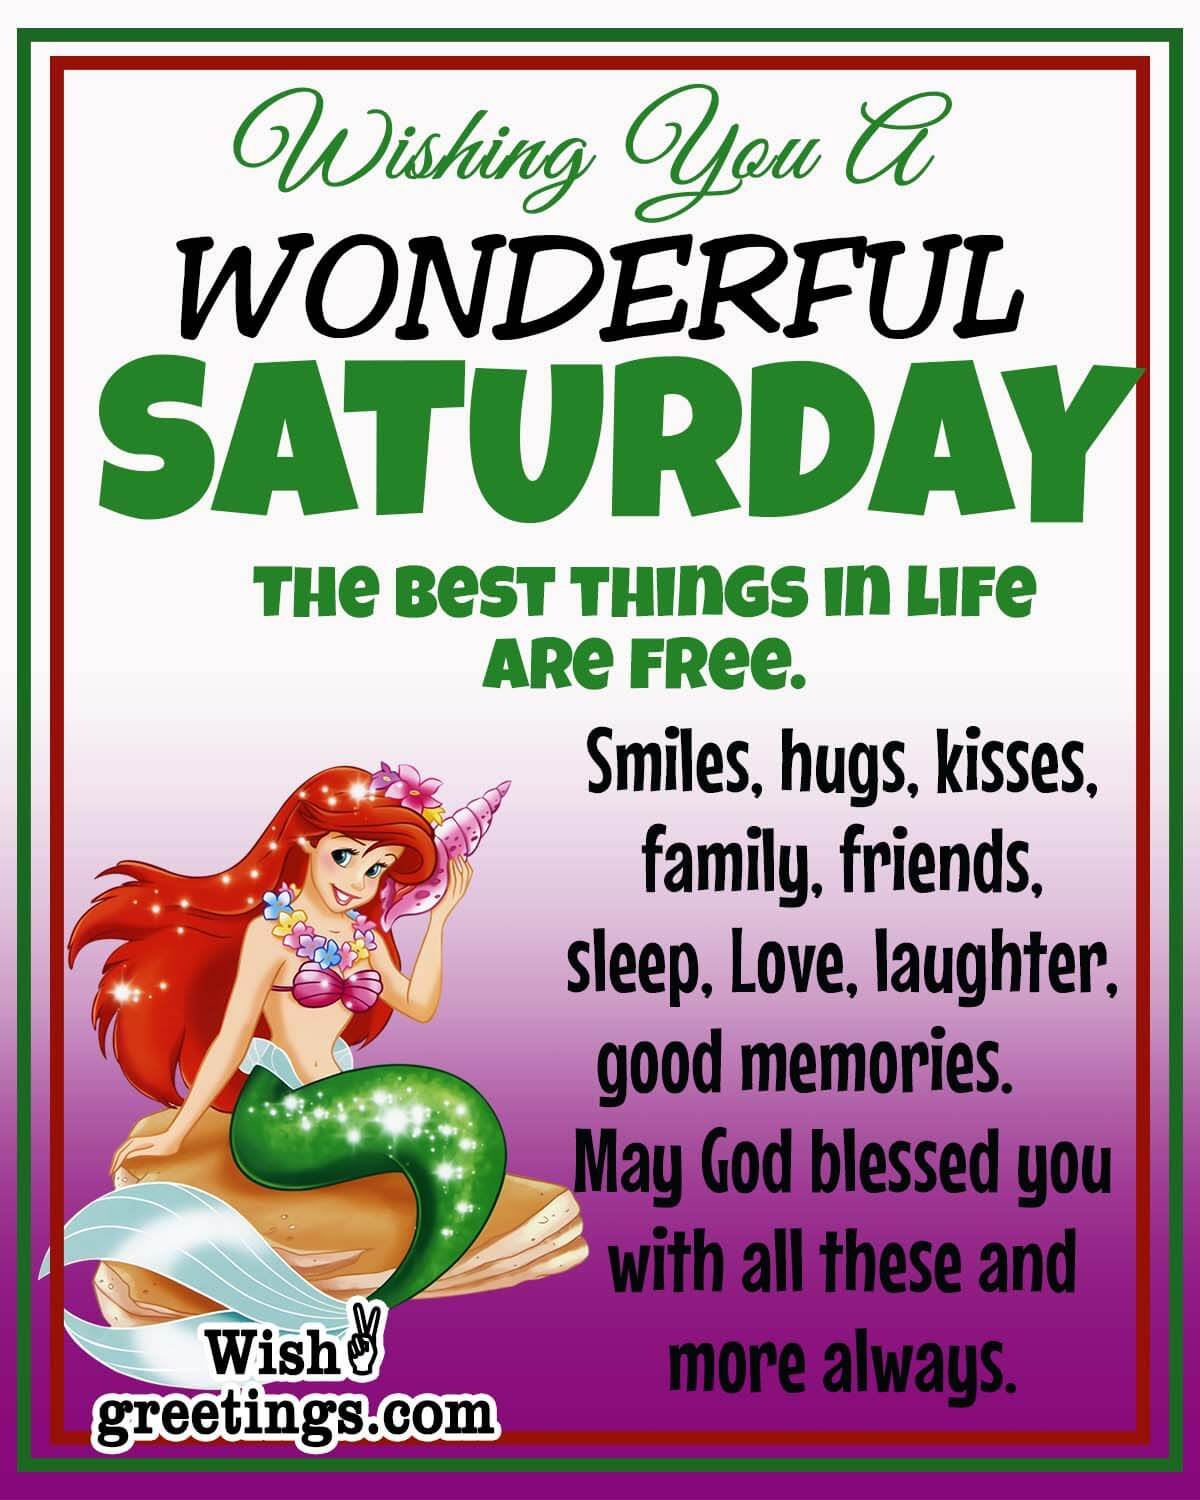 Wonderful Saturday Wish Image